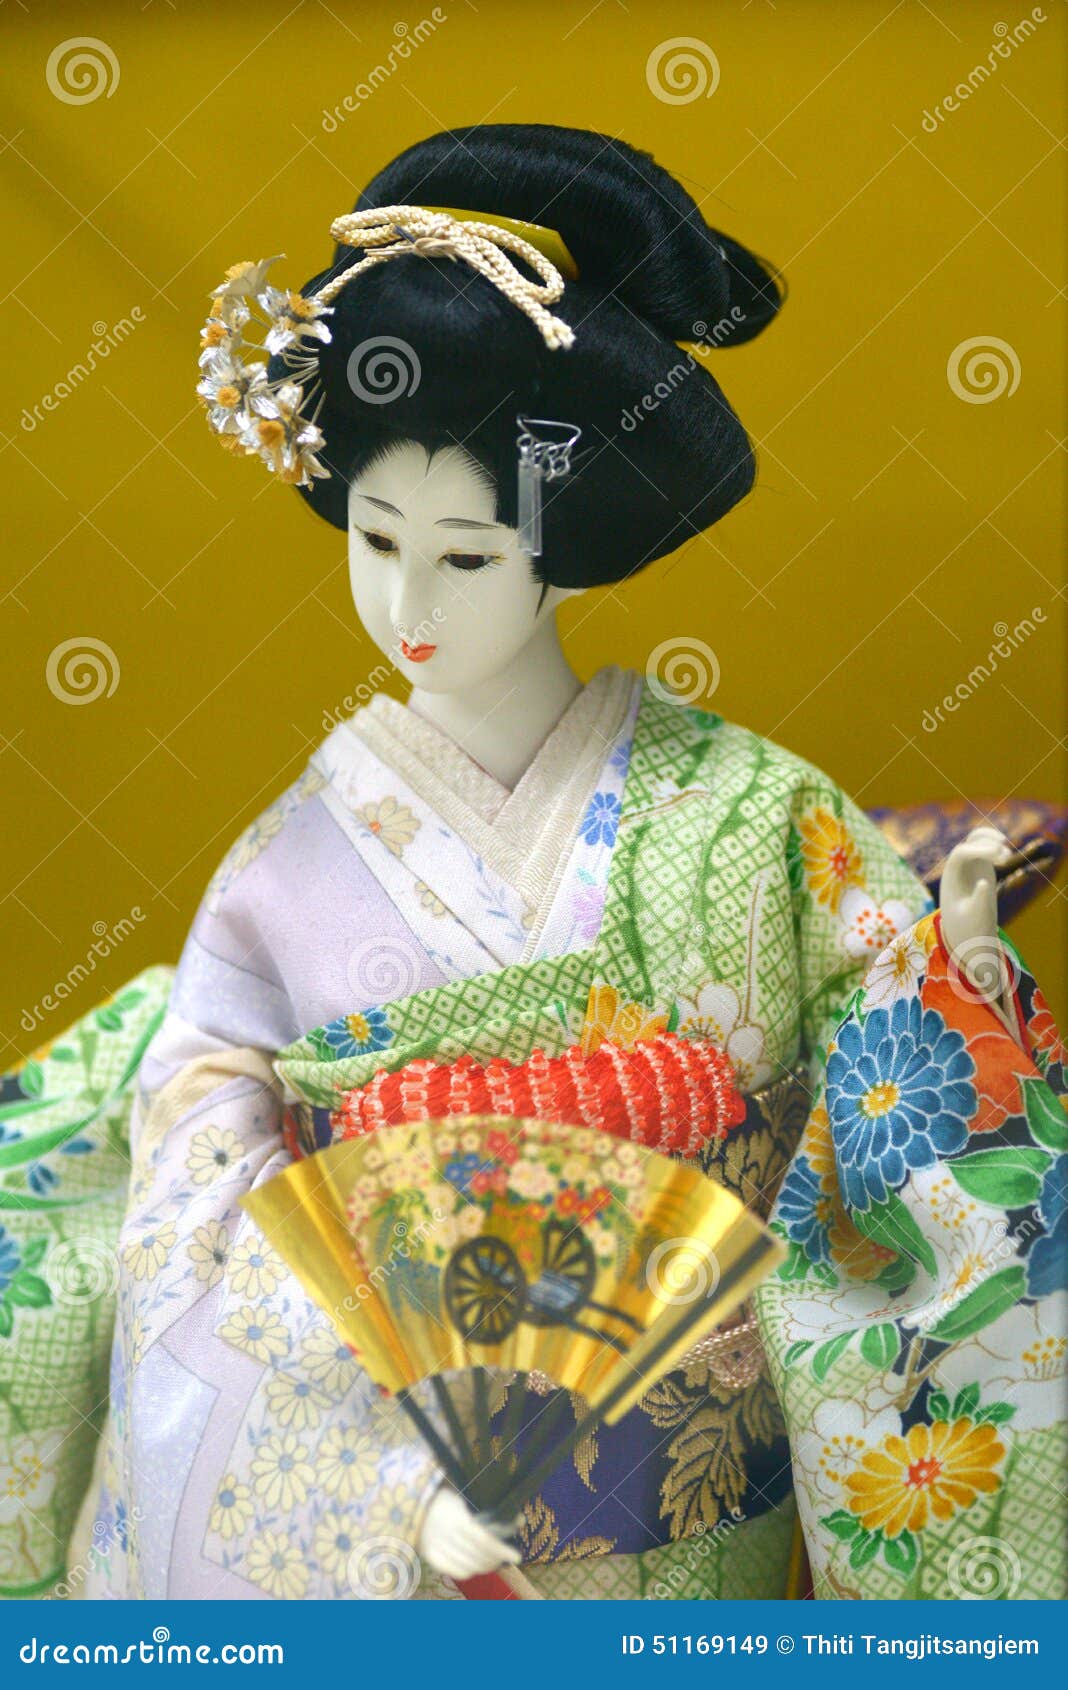 Geisha doll stock image. Image of asia, doll, souvenir - 51169149